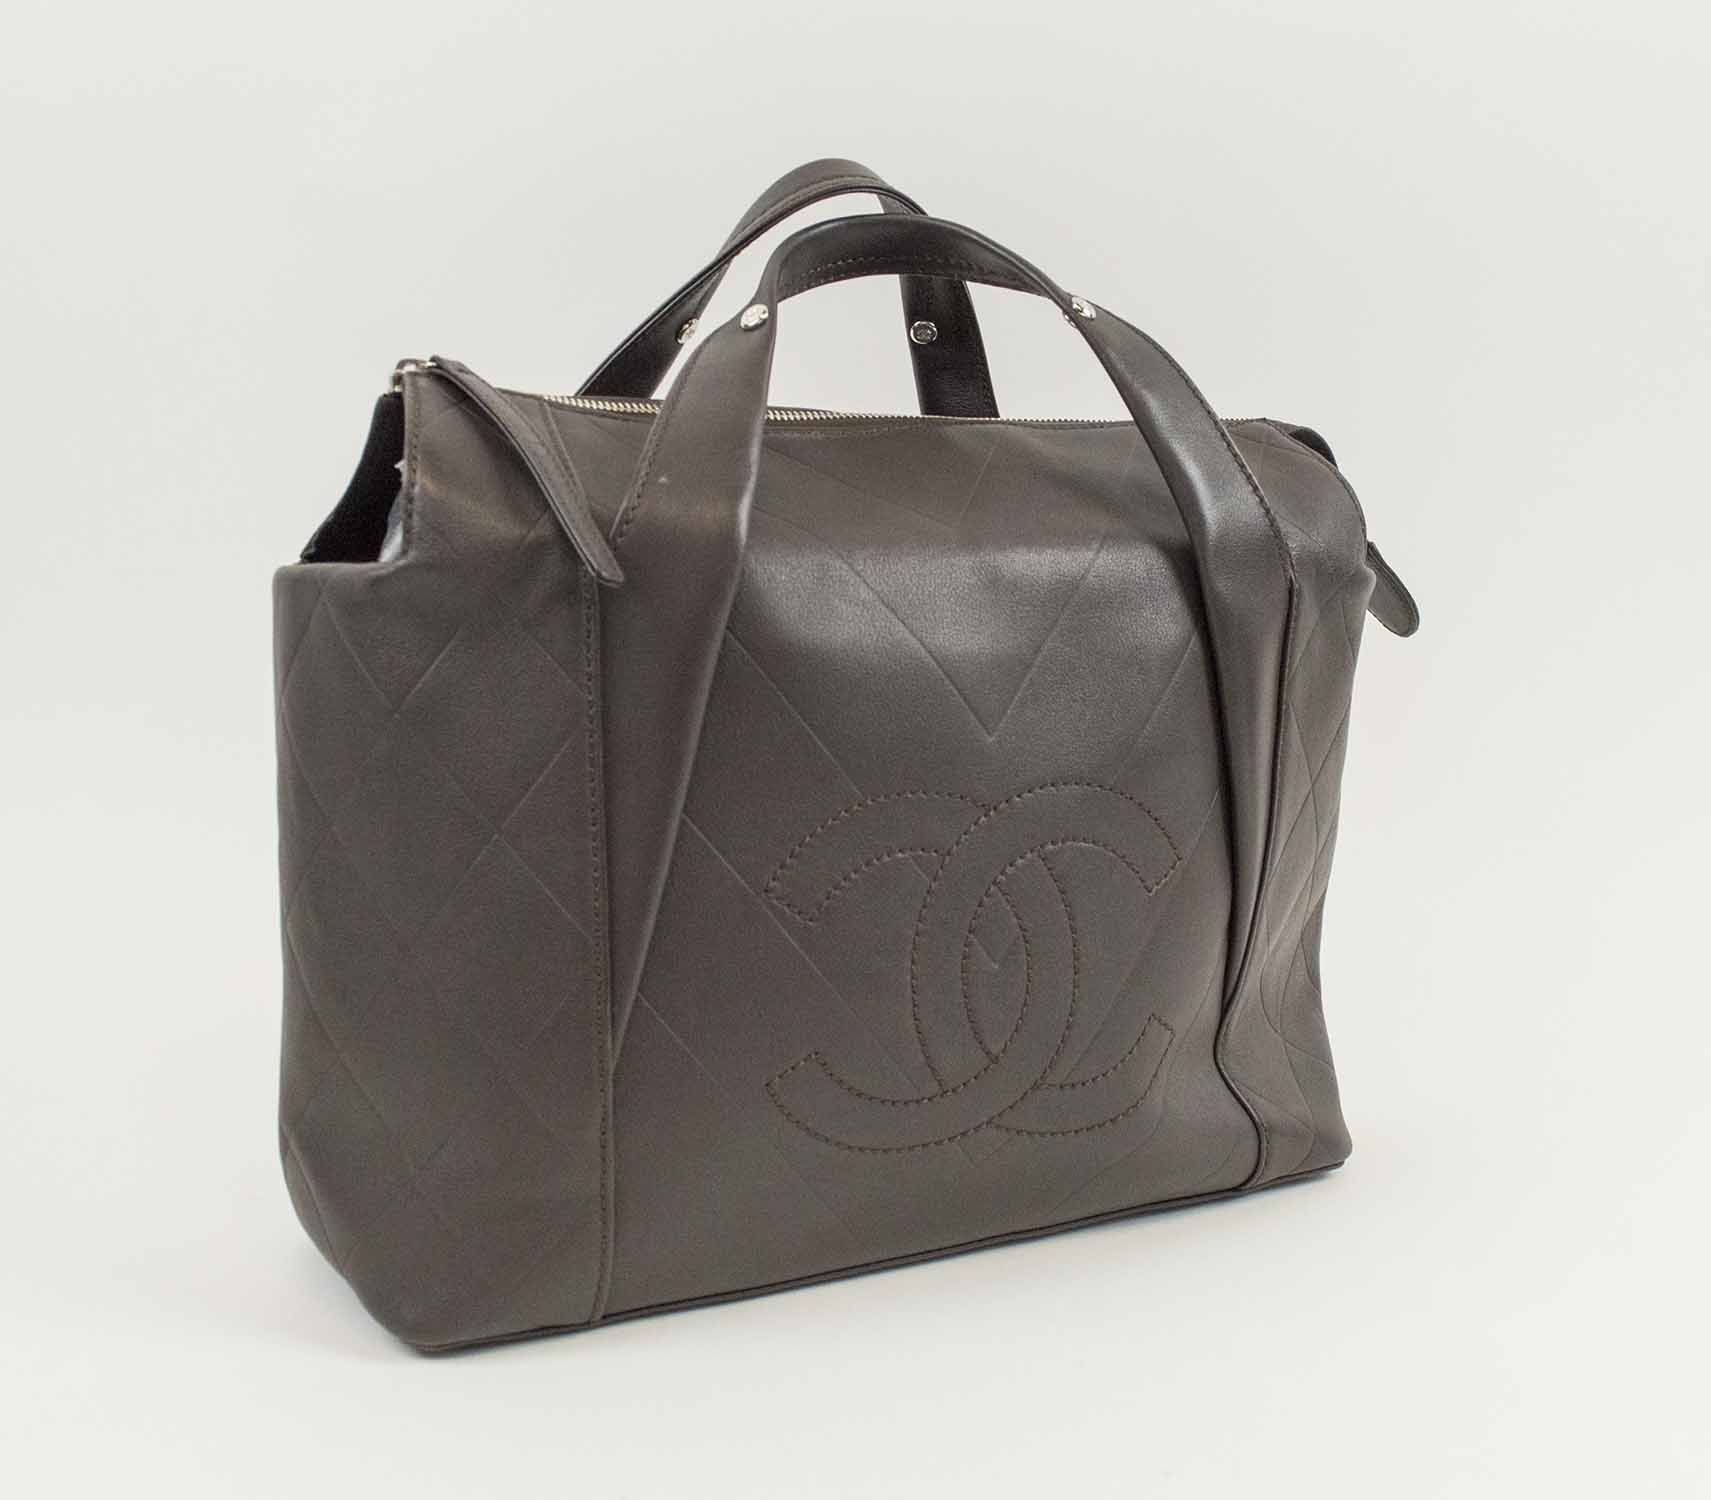 Chanel Black Patent Leather Cc Accordion Flap Bag